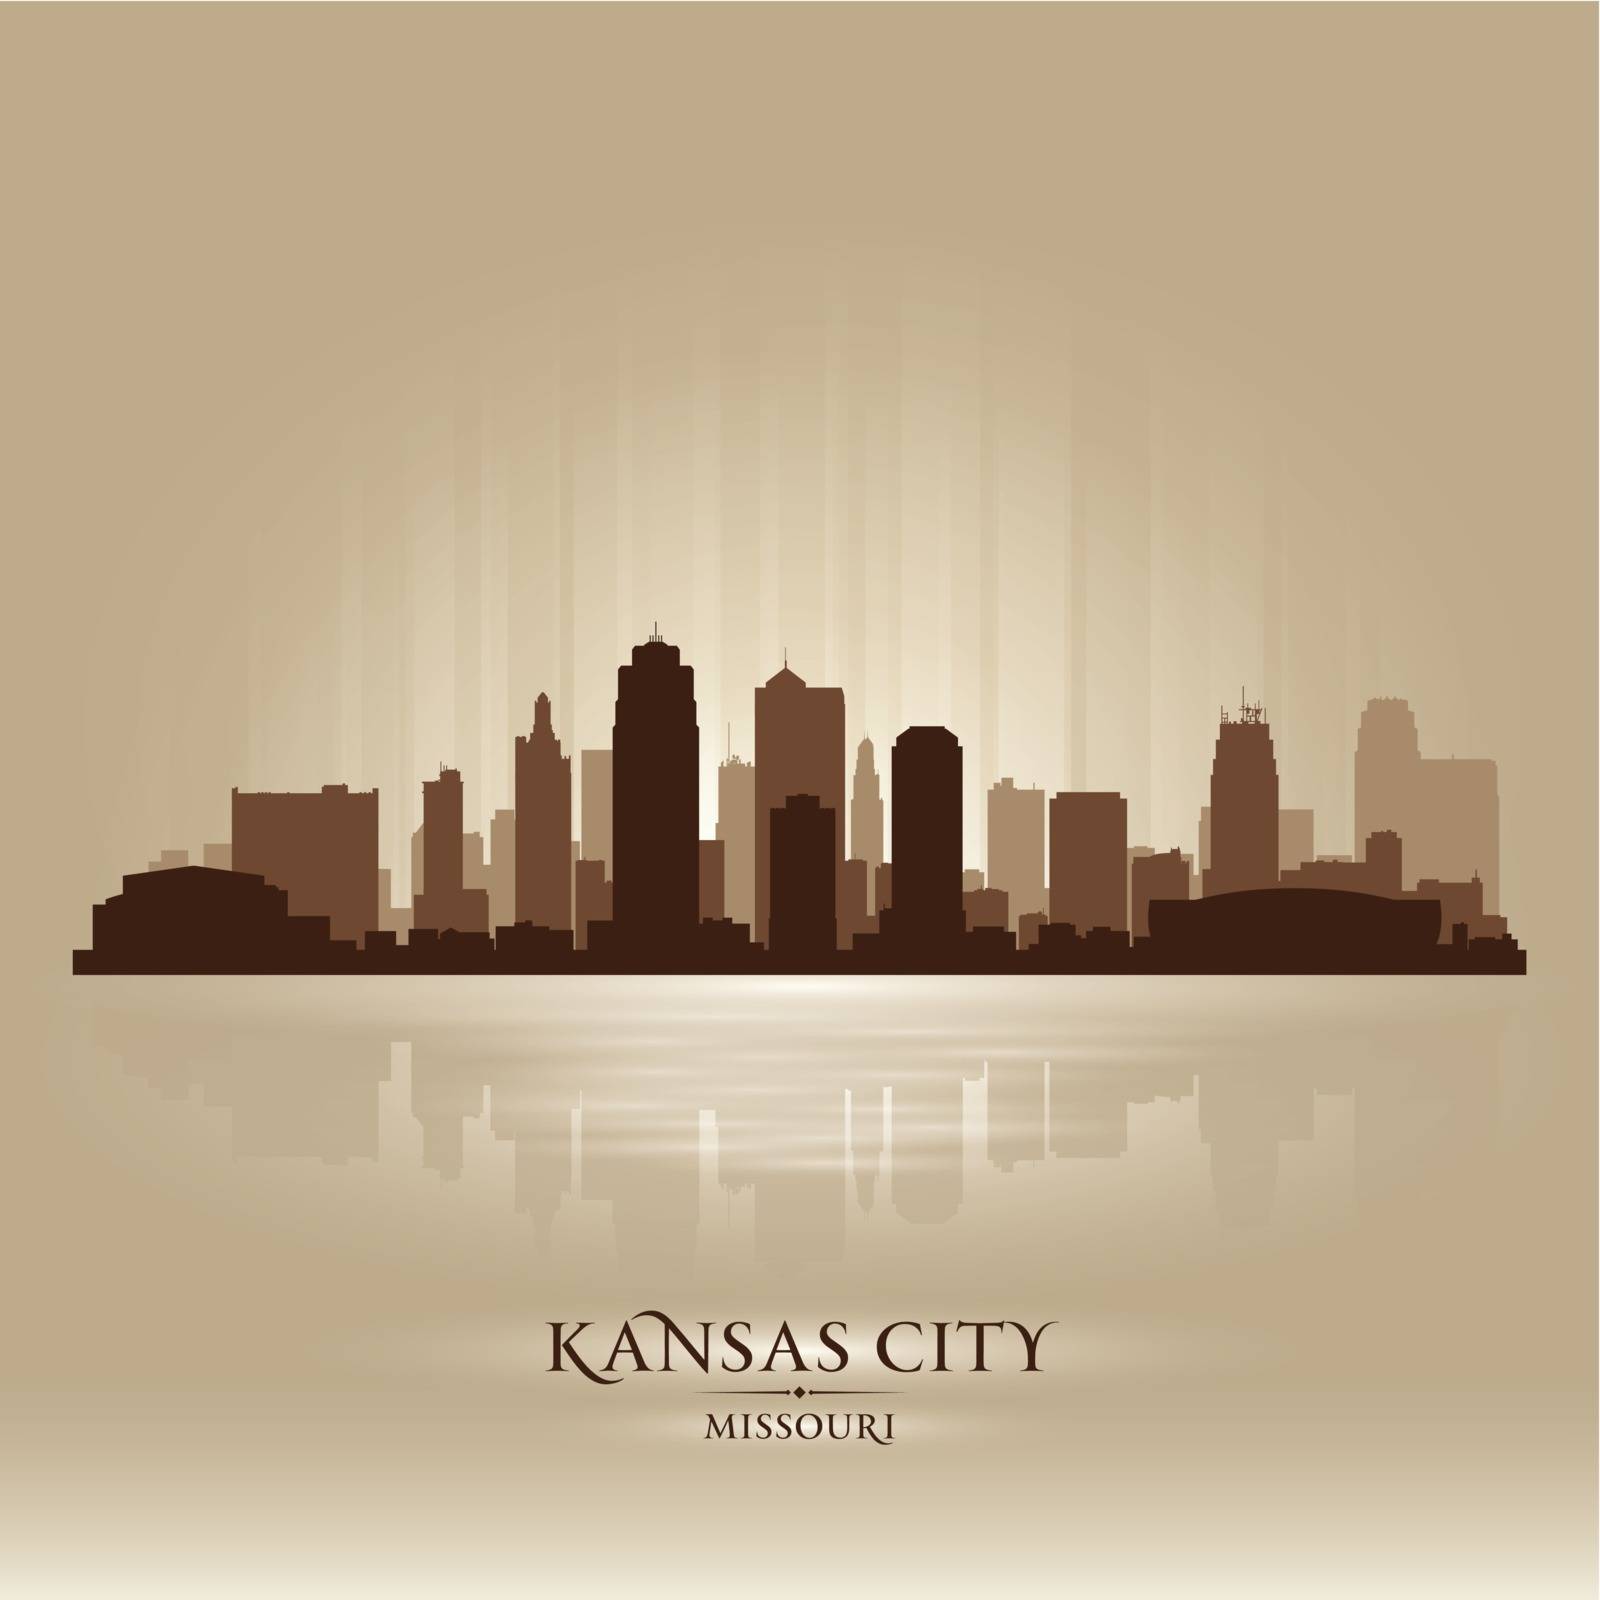 Kansas City Missouri city skyline silhouette. Vector illustration